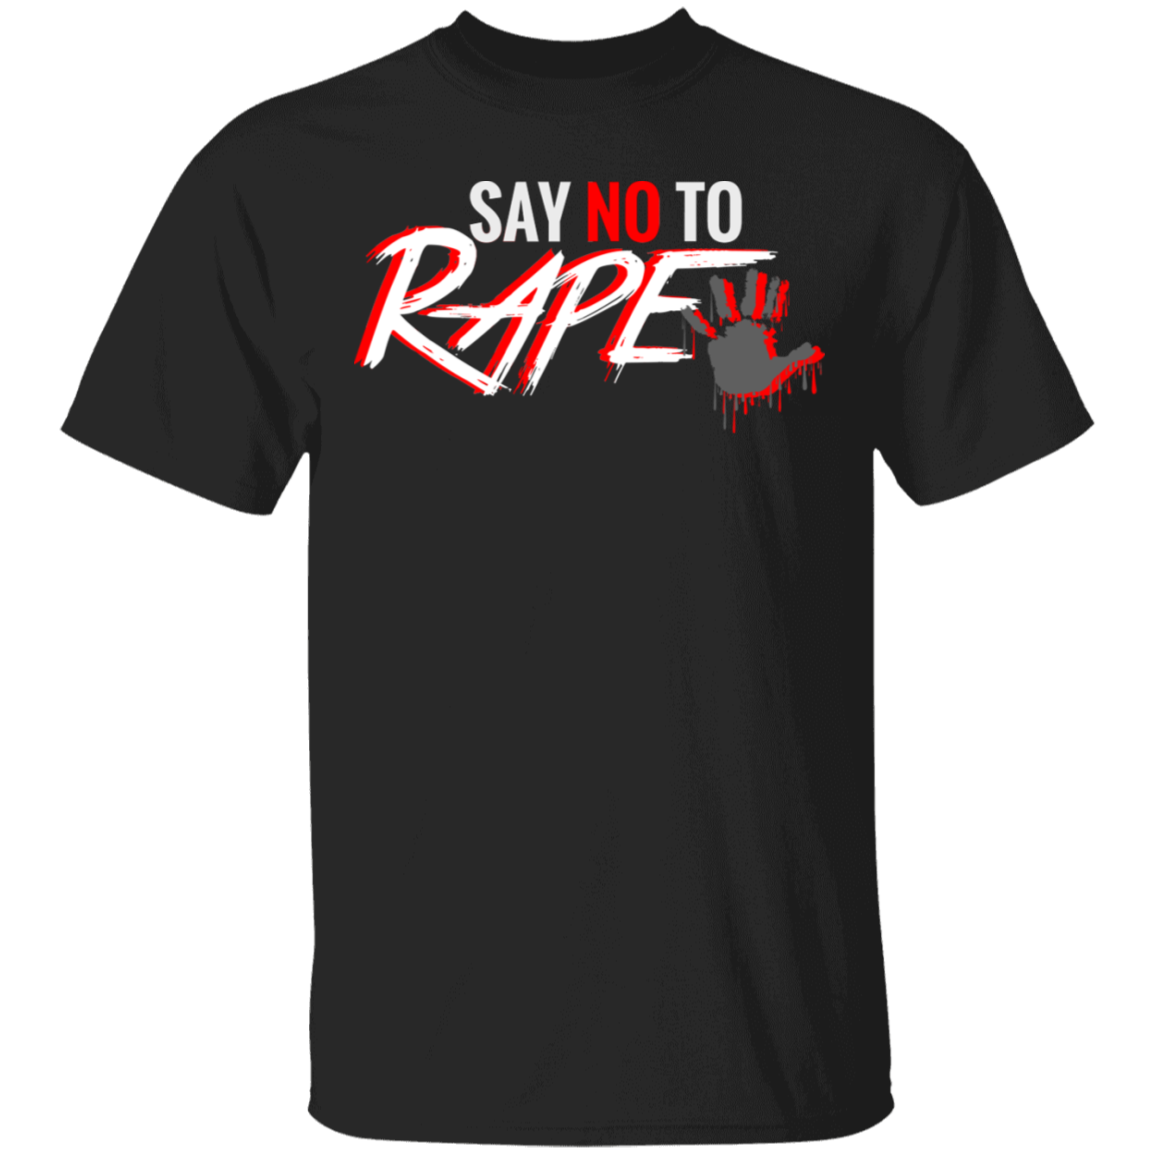 Say No To Rape T-Shirt